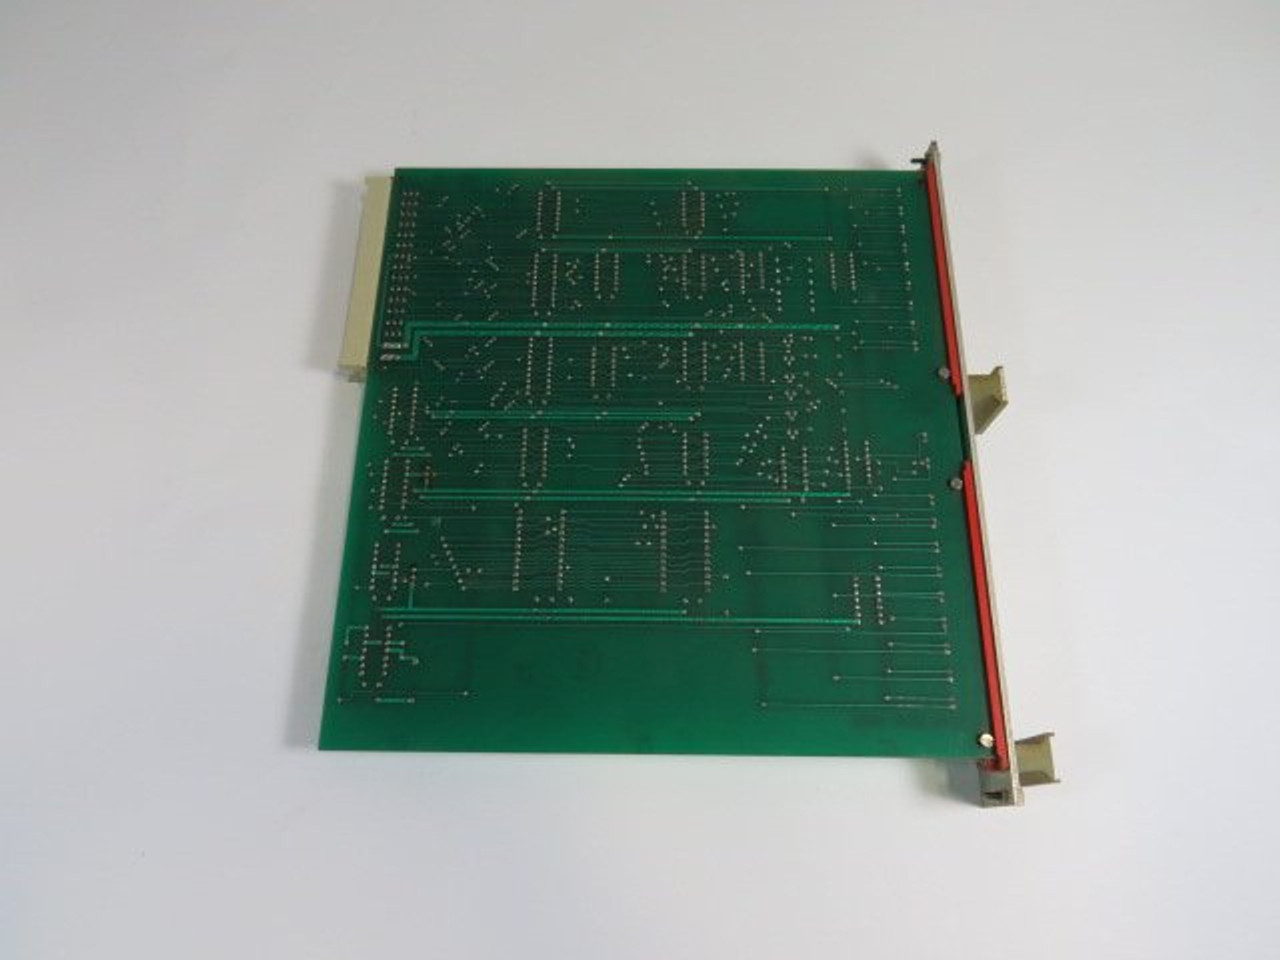 Generic M2002-P-5 Rev 2.0 Power Control Card Board USED